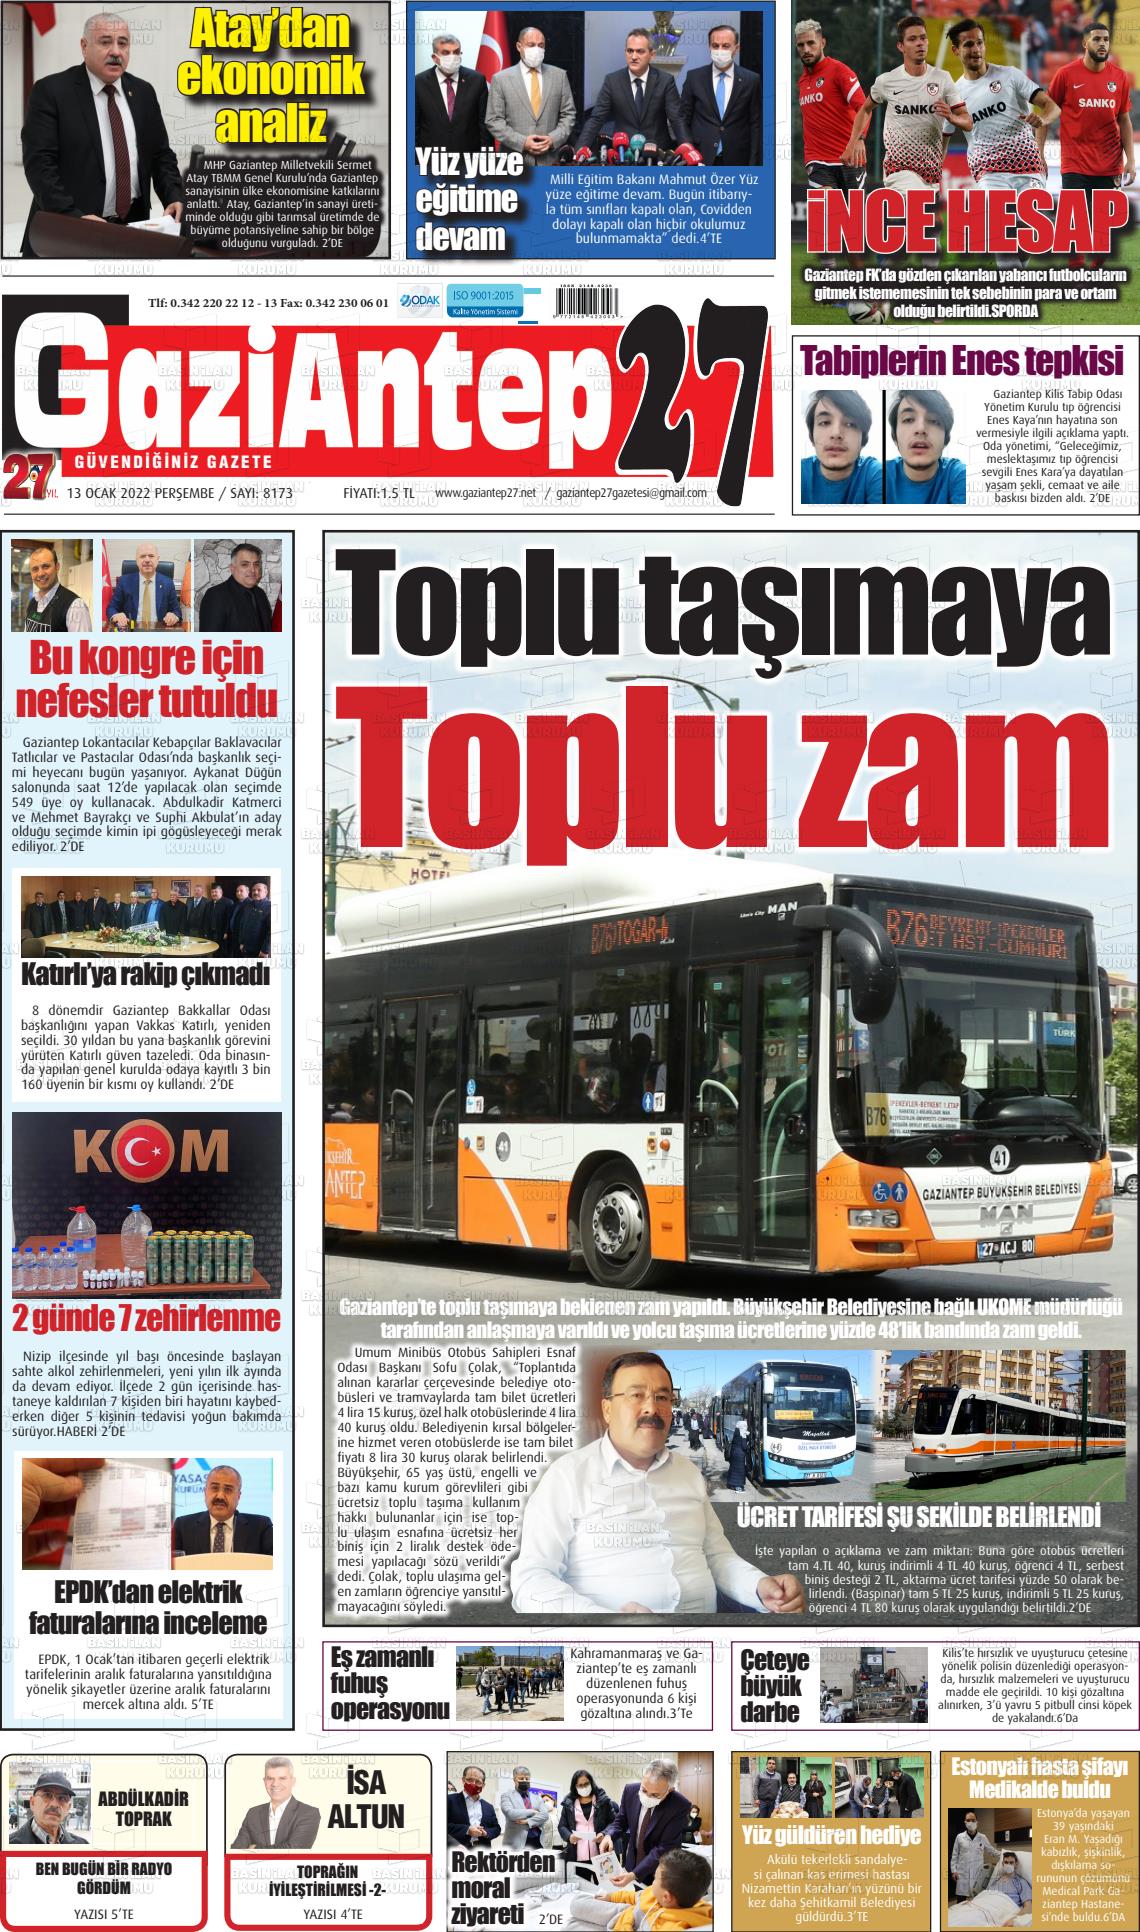 13 Ocak 2022 Gaziantep 27 Gazete Manşeti